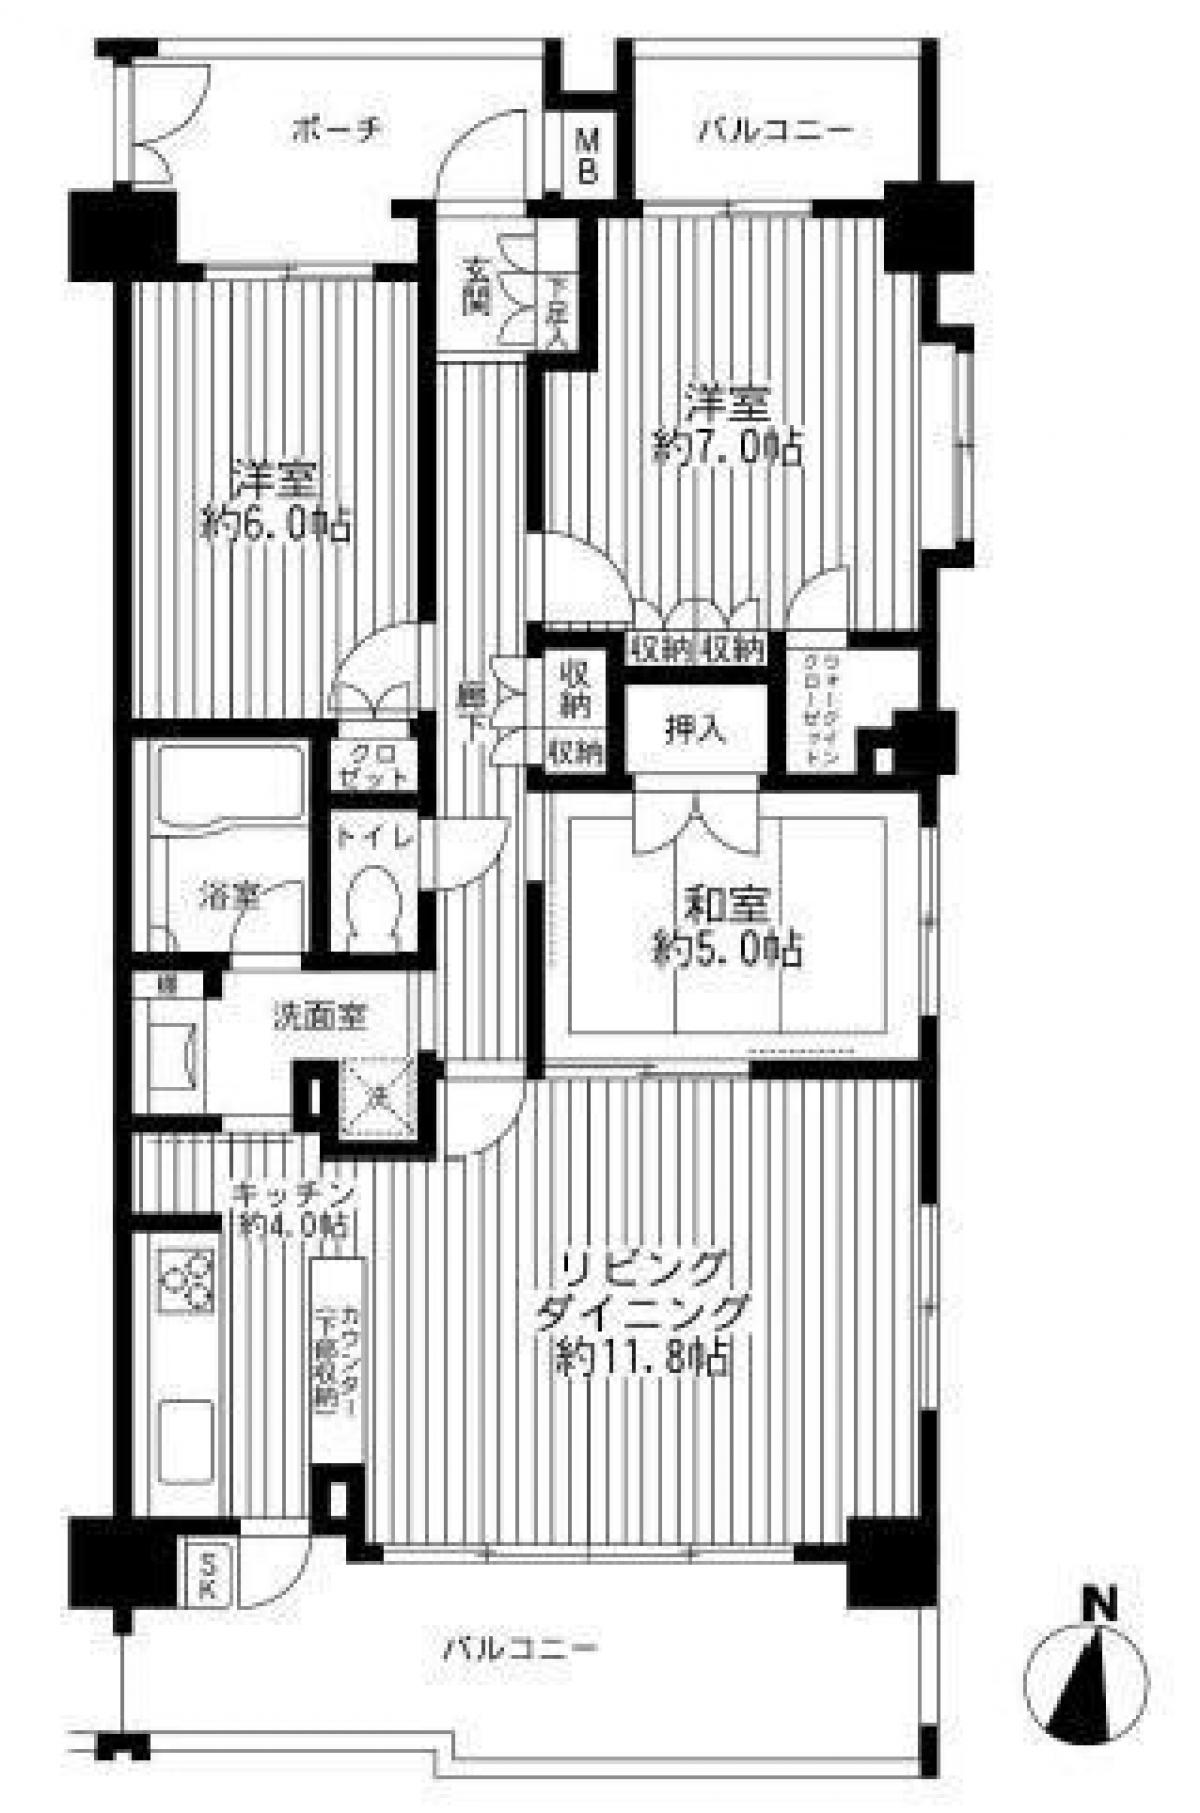 Picture of Apartment For Sale in Yokohama Shi Izumi Ku, Kanagawa, Japan